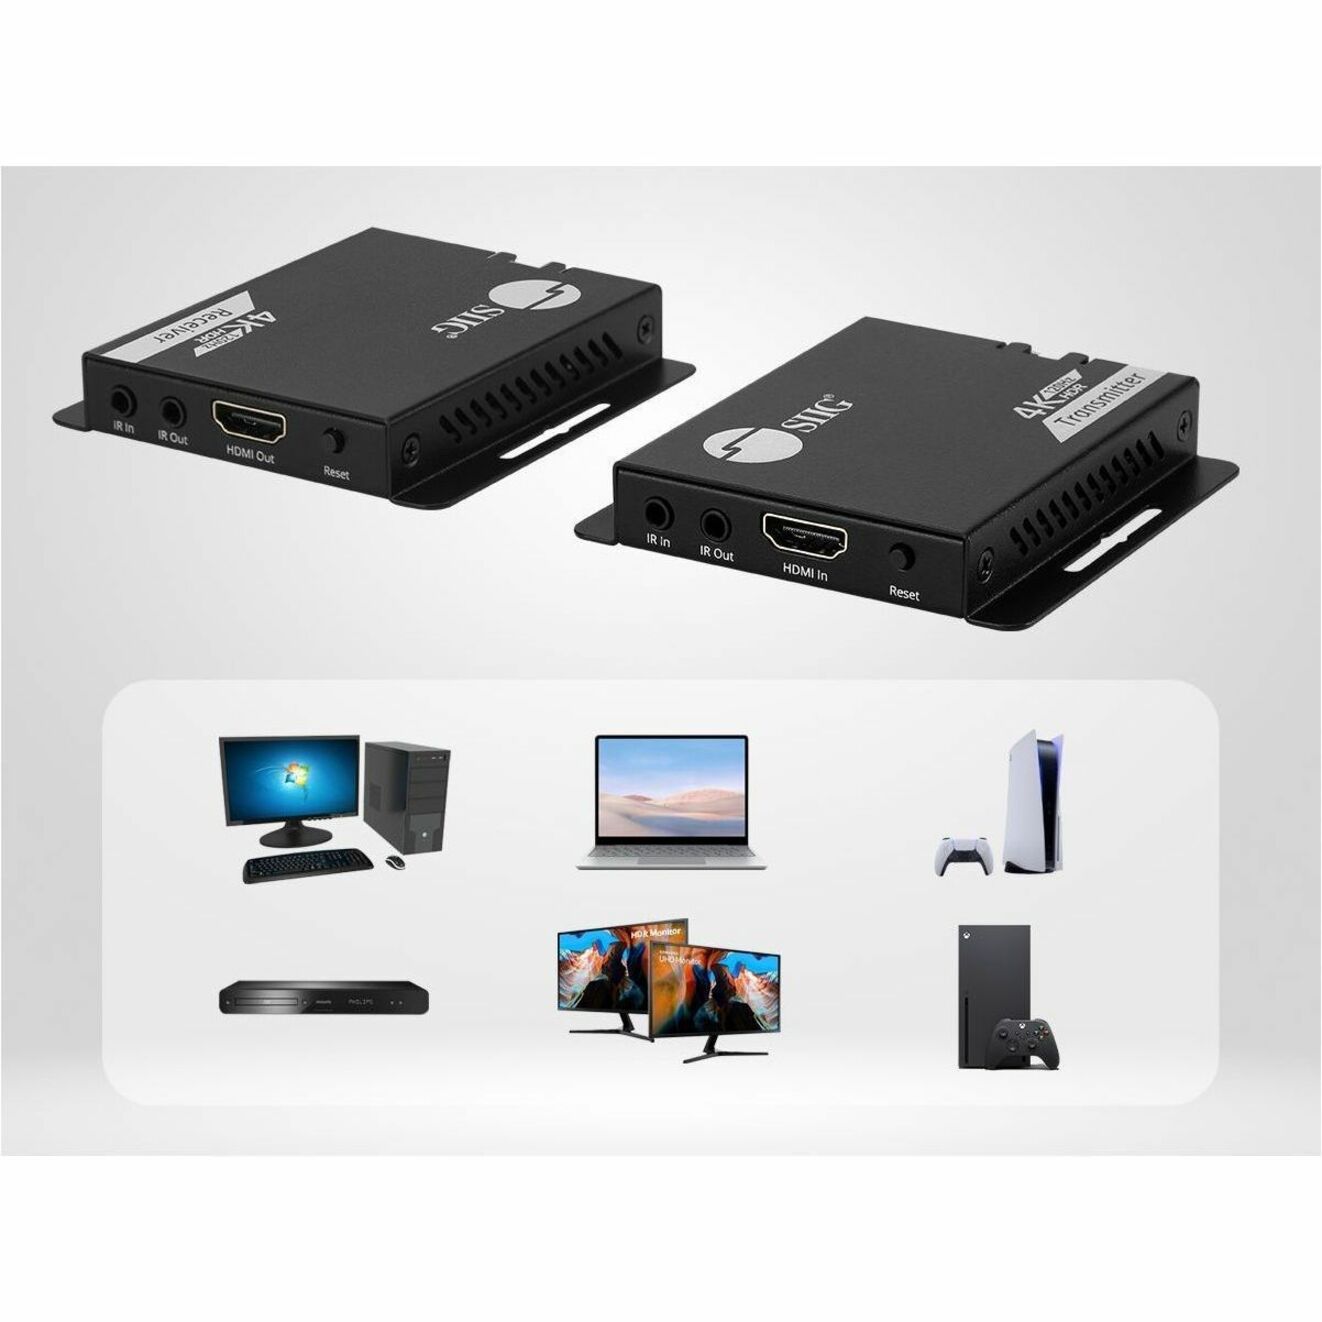 SIIG CE-H27L11-S1 4K120Hz HDMI Extender with IR - Up to 132ft (40M) - Nearly zero latency, Gaming